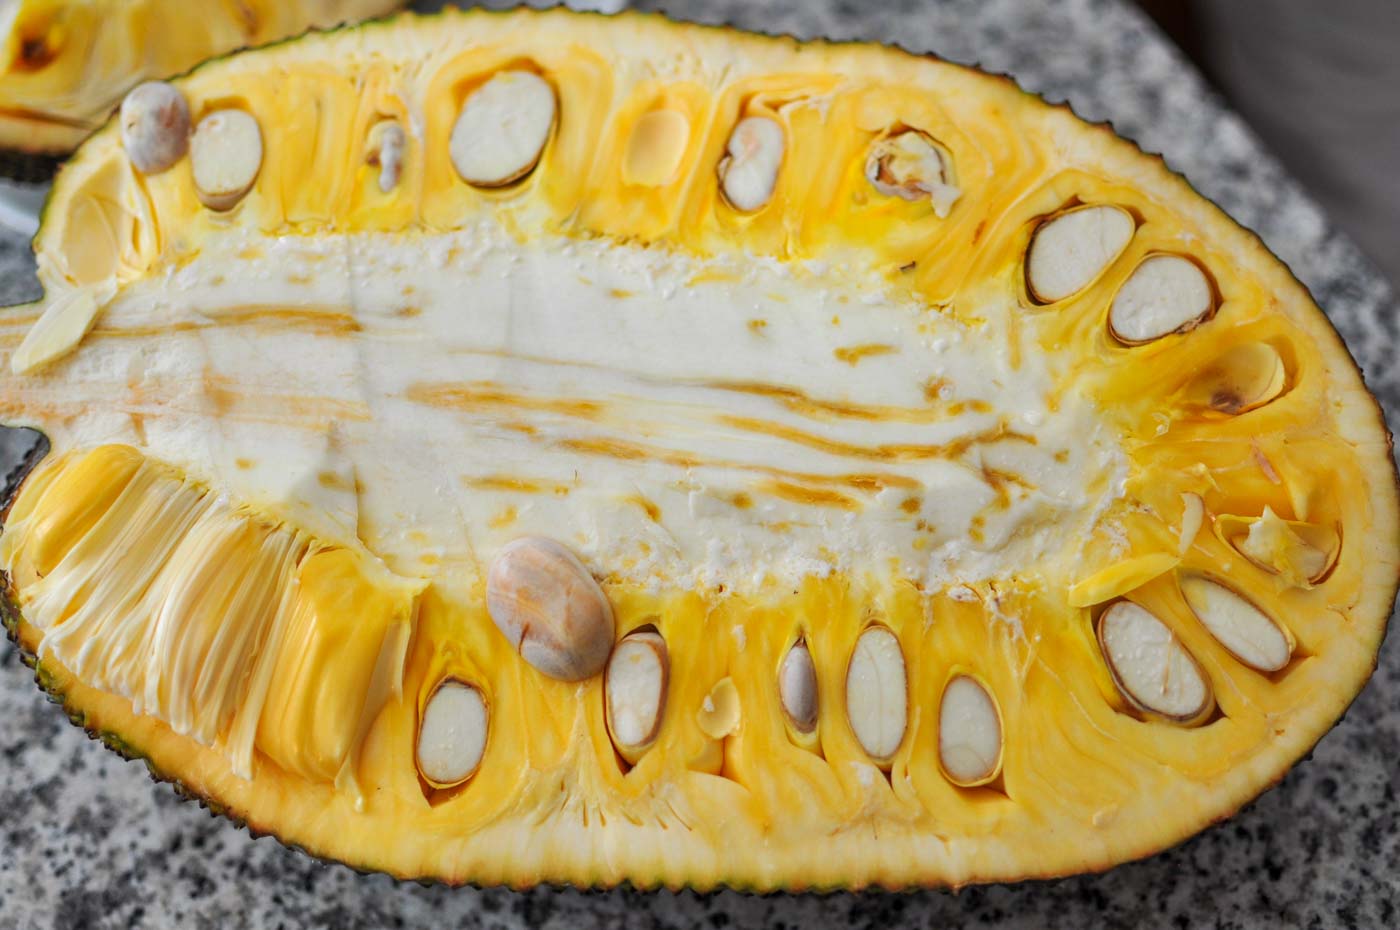 Inside of a jackfruit